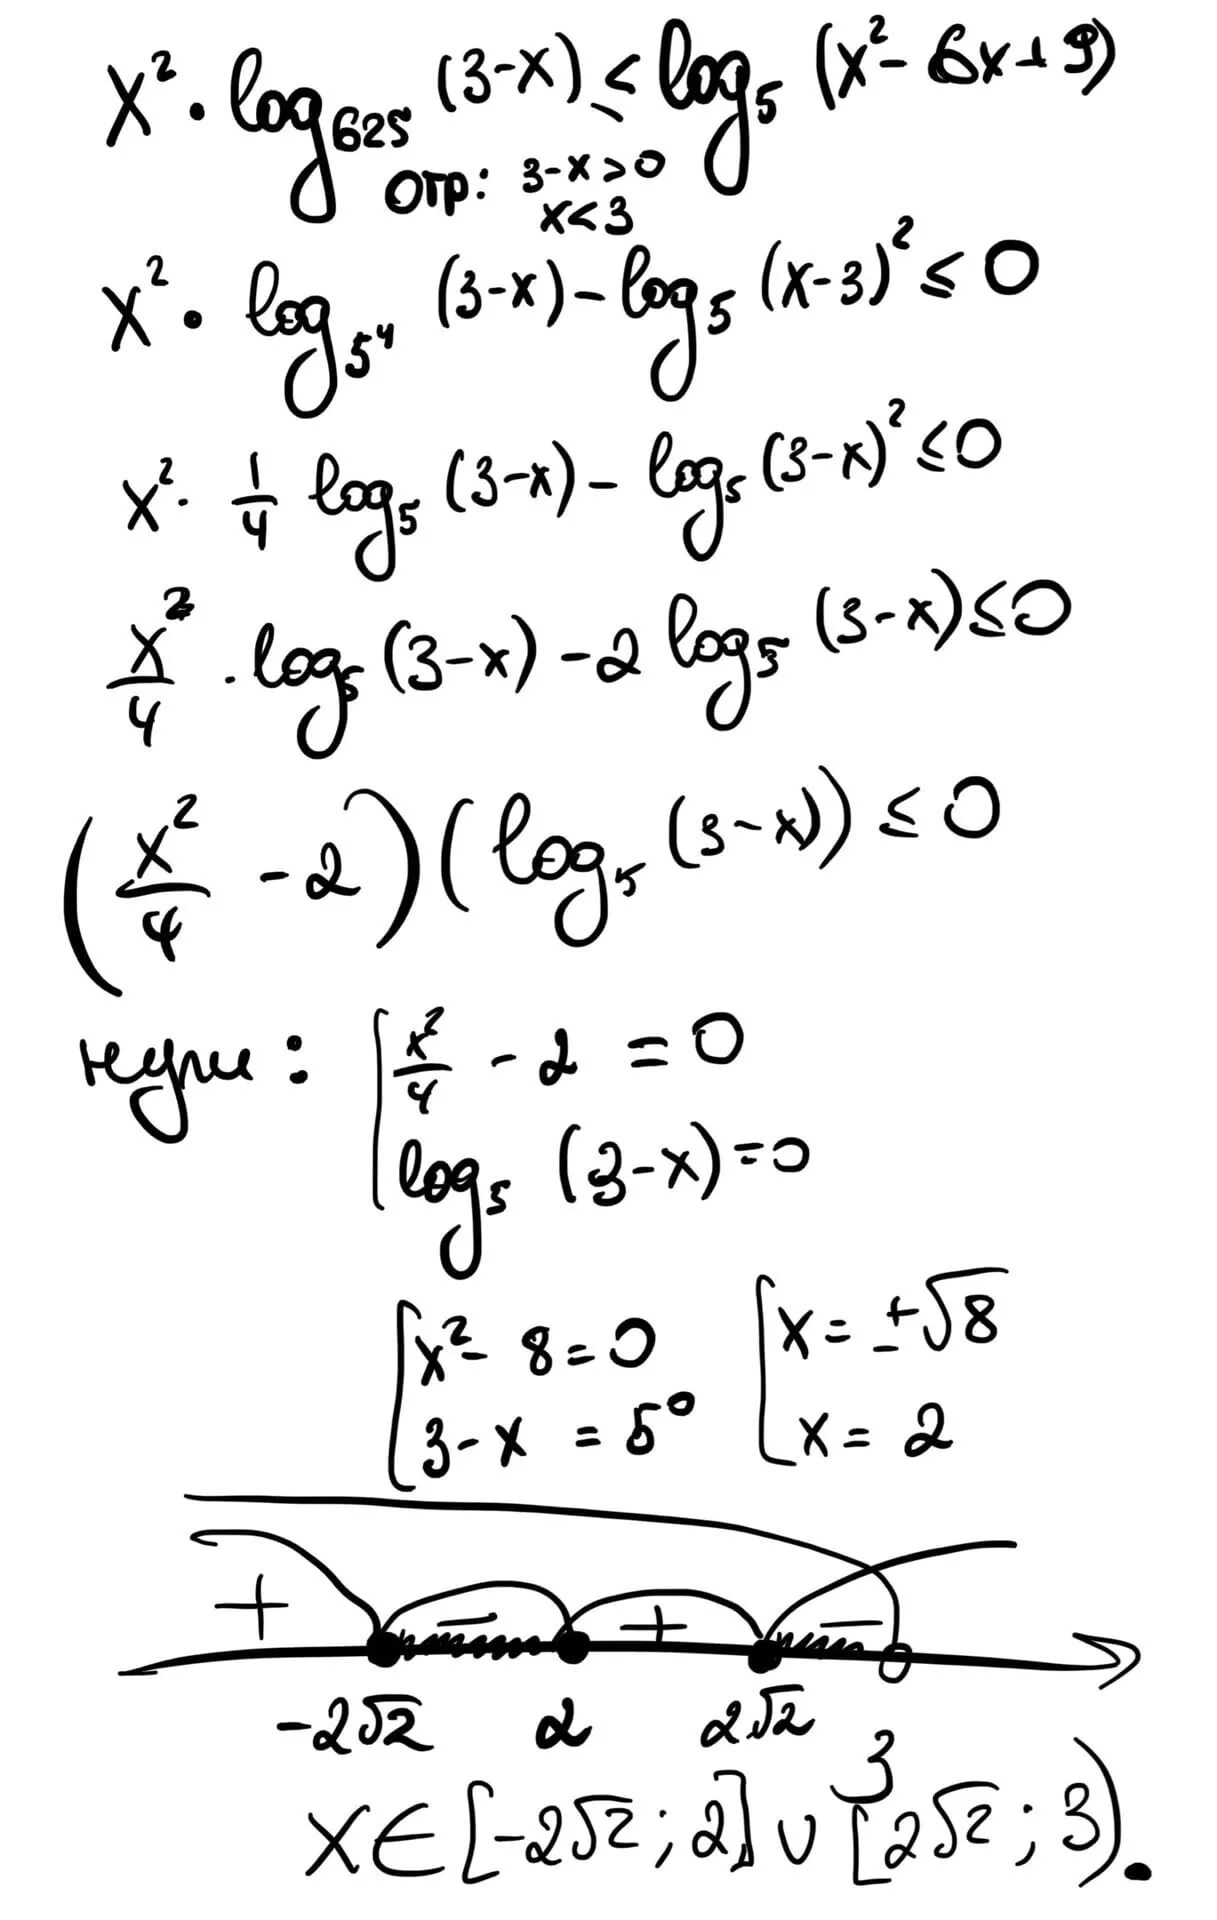 Х^(log 5 x -2)=125. X2log343 x+3 log7 x2+6x+9. Log9x-6 x+2 /log9. X2log625 -2-x log log5 x2.